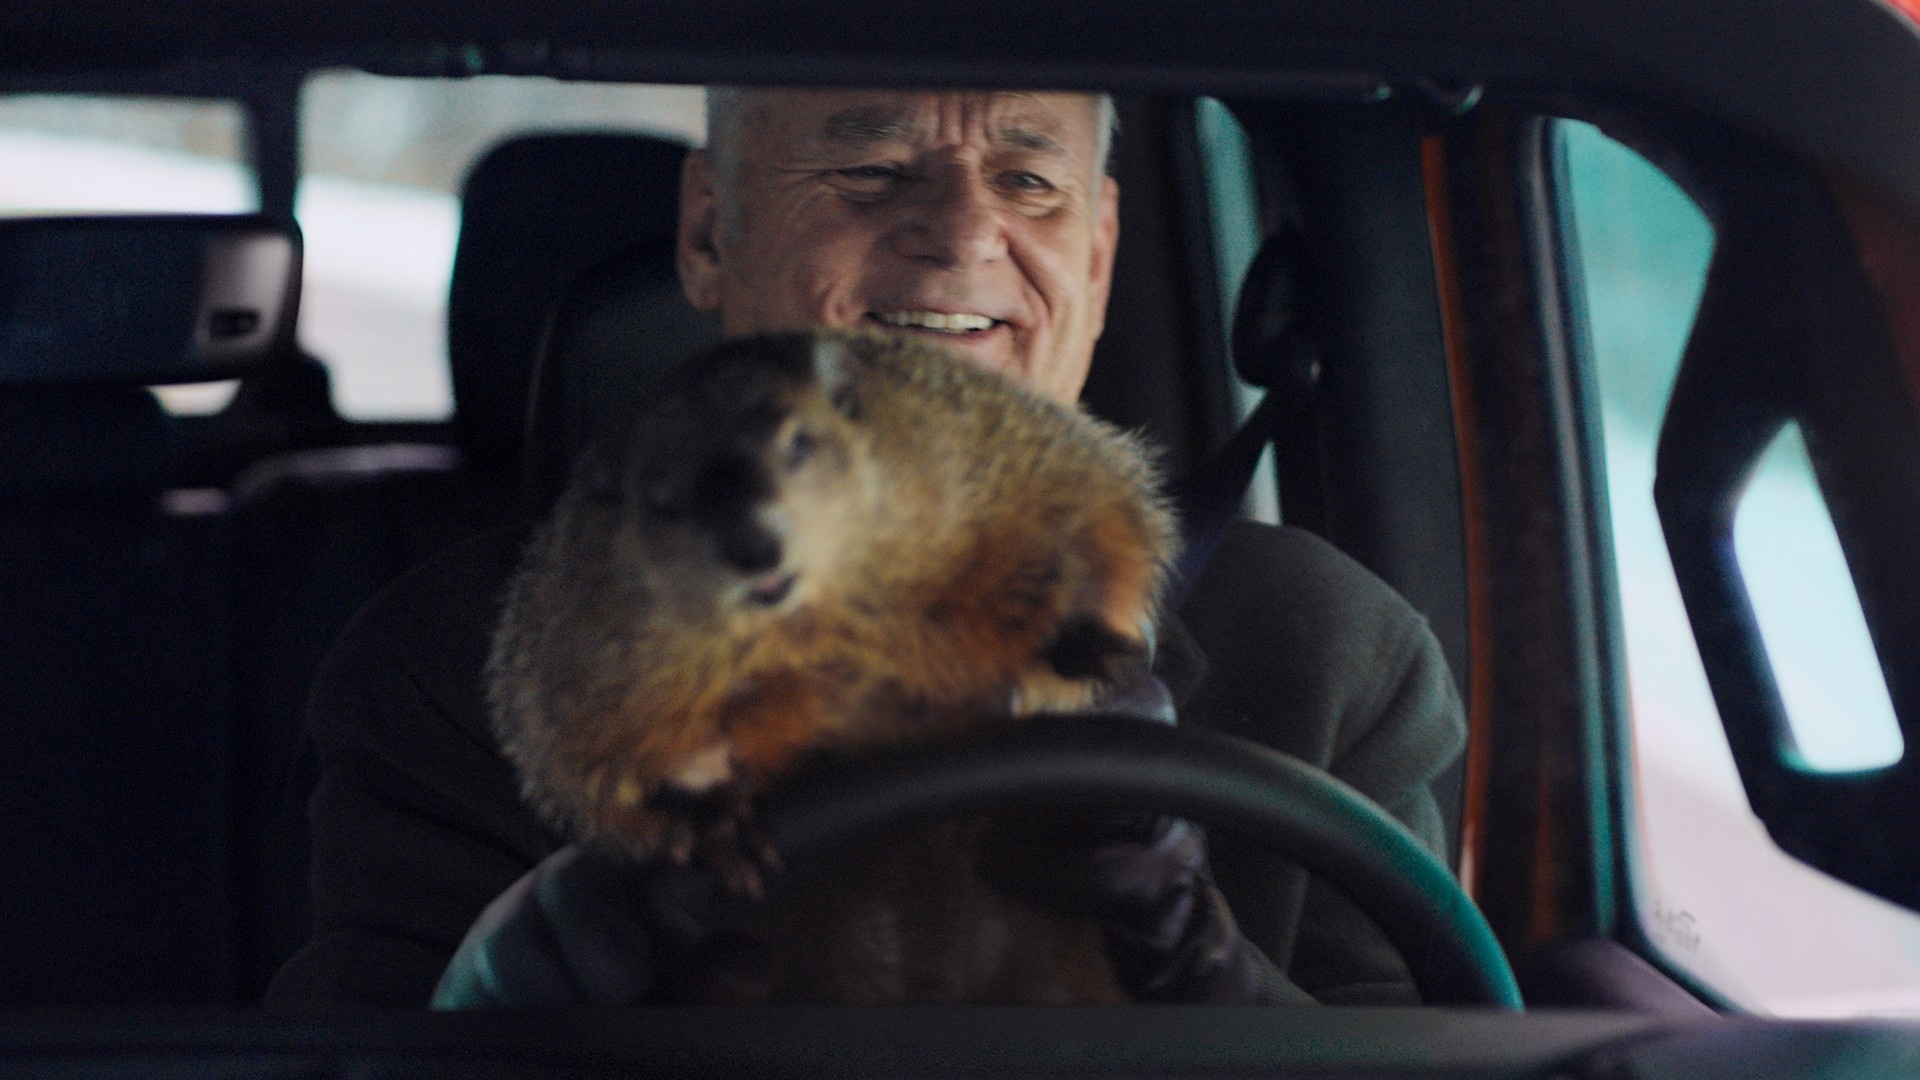 Groundhog Day (Movie): Jeep's 2020 Super Bowl Ad, Punxsutawney Phil, Bill Murray. 1920x1080 Full HD Wallpaper.